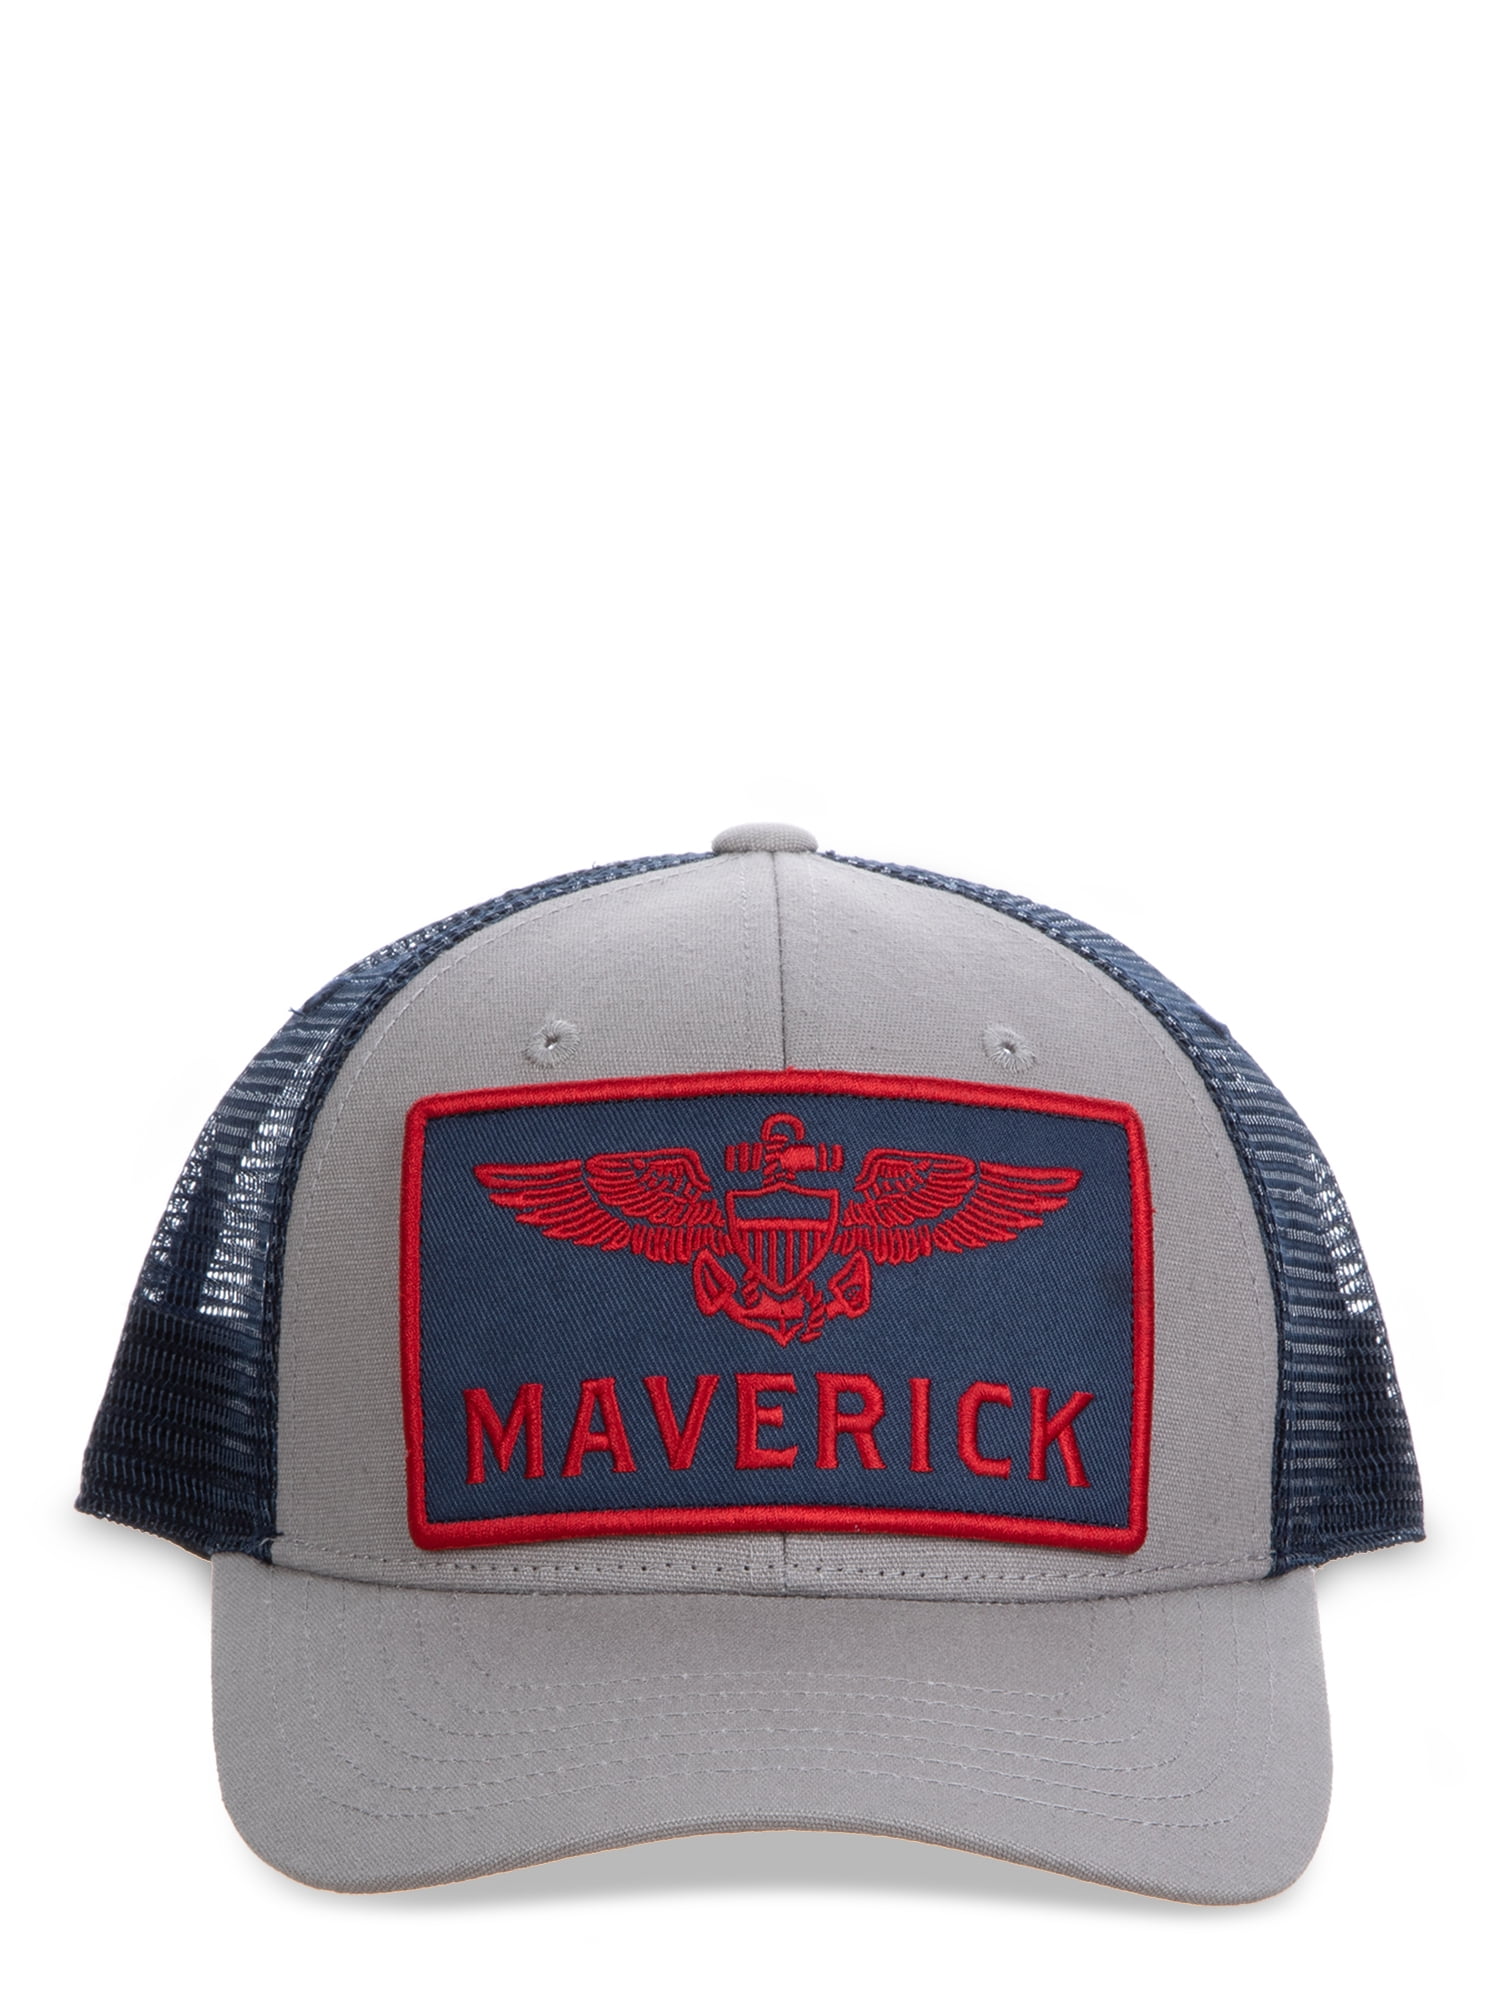 Top Gun Maverick Hat